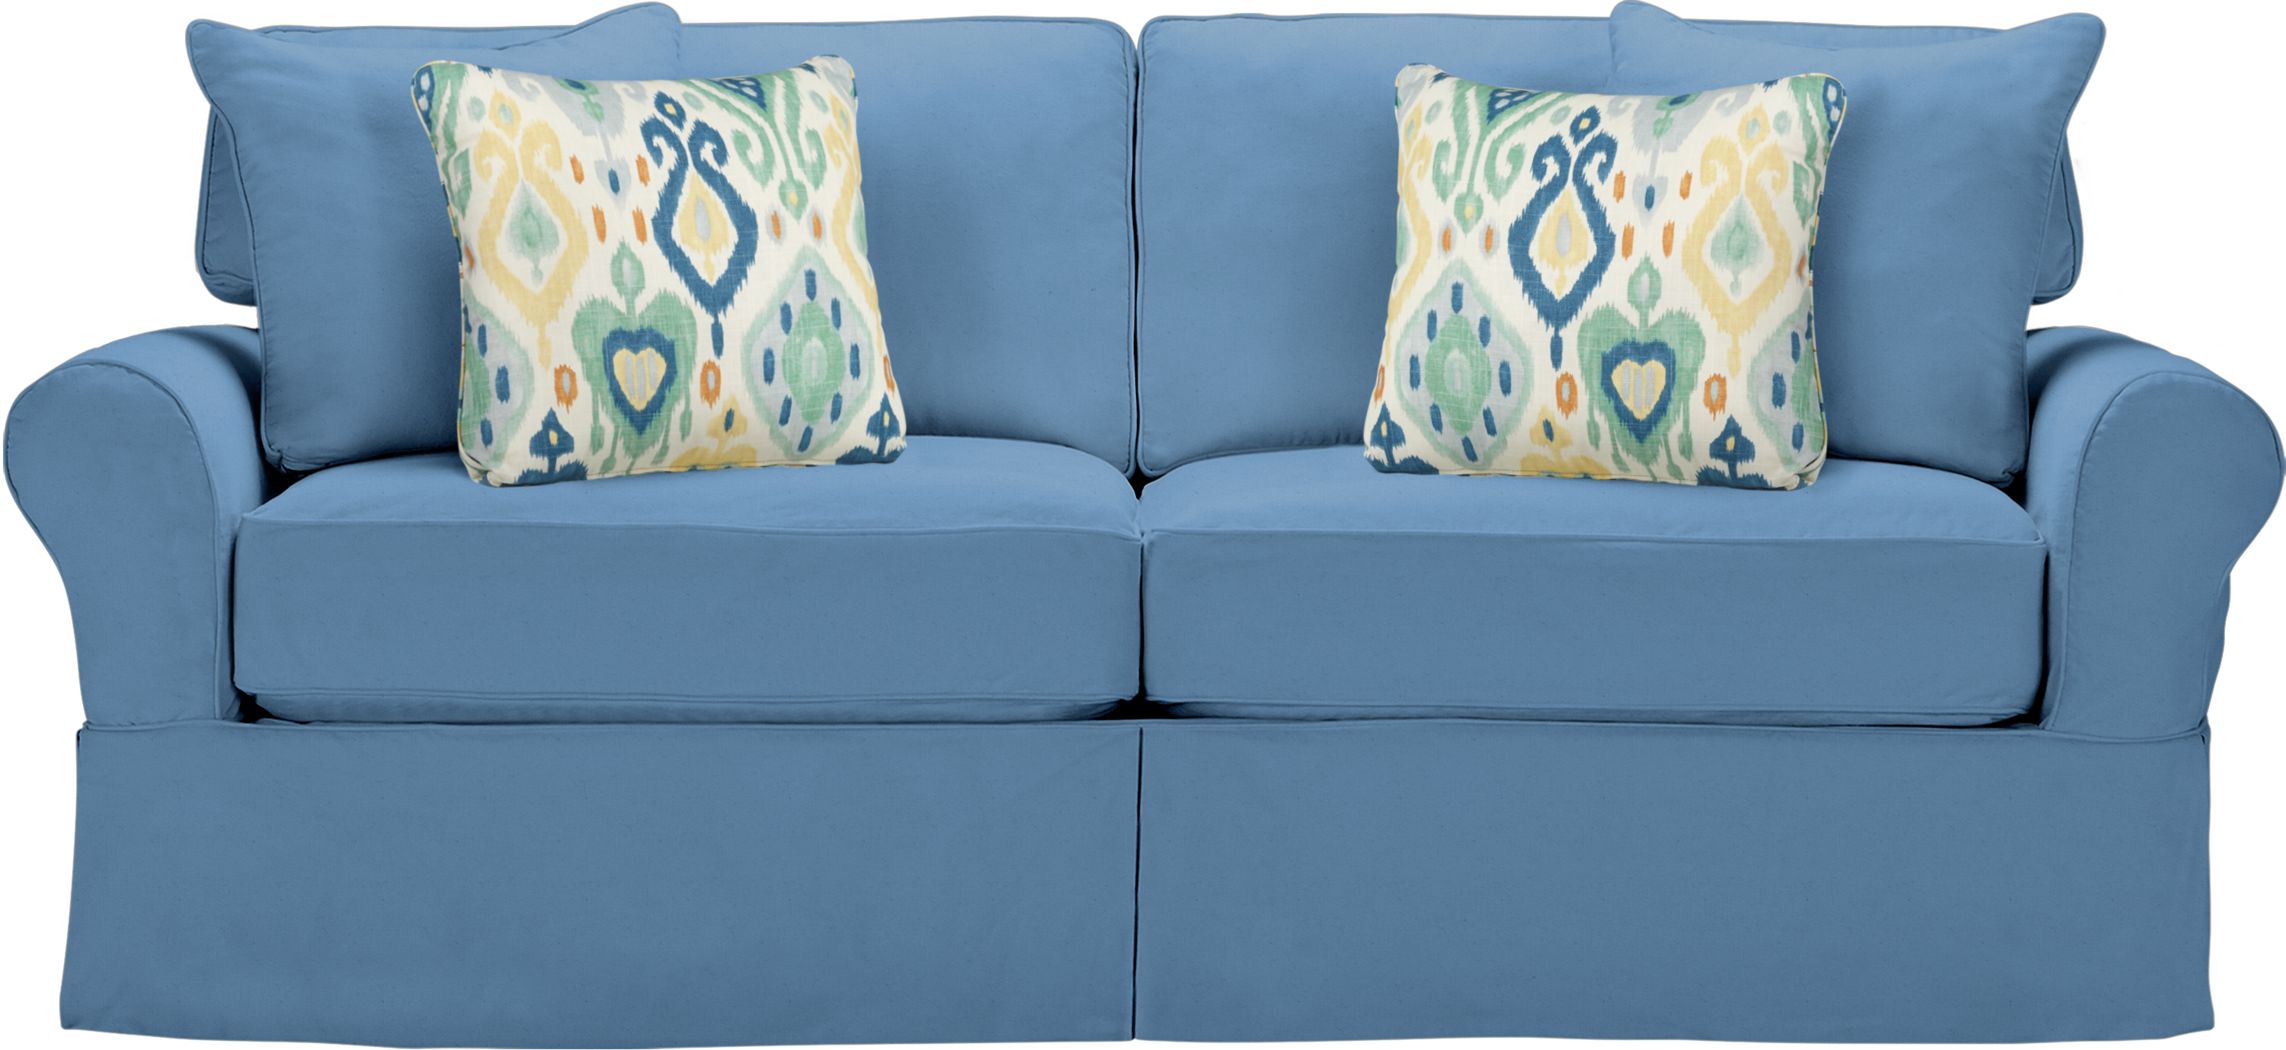 Cindy Crawford Home Beachside Blue Denim Sofa 4 Colorful